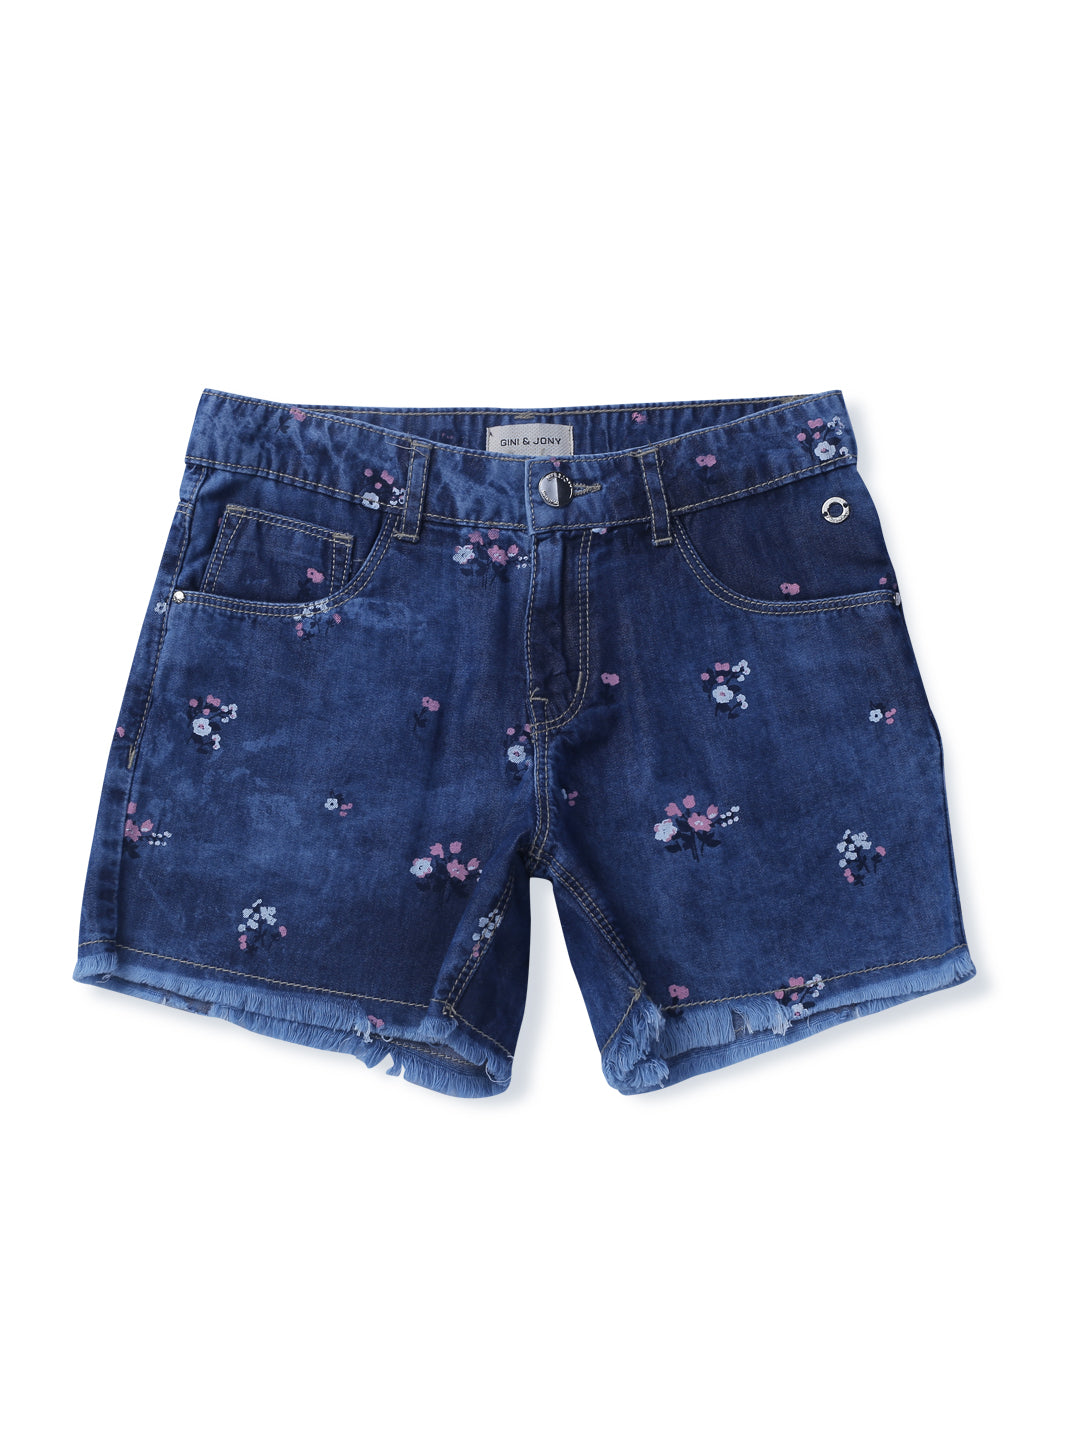 Girls Blue Printed Denim Shorts